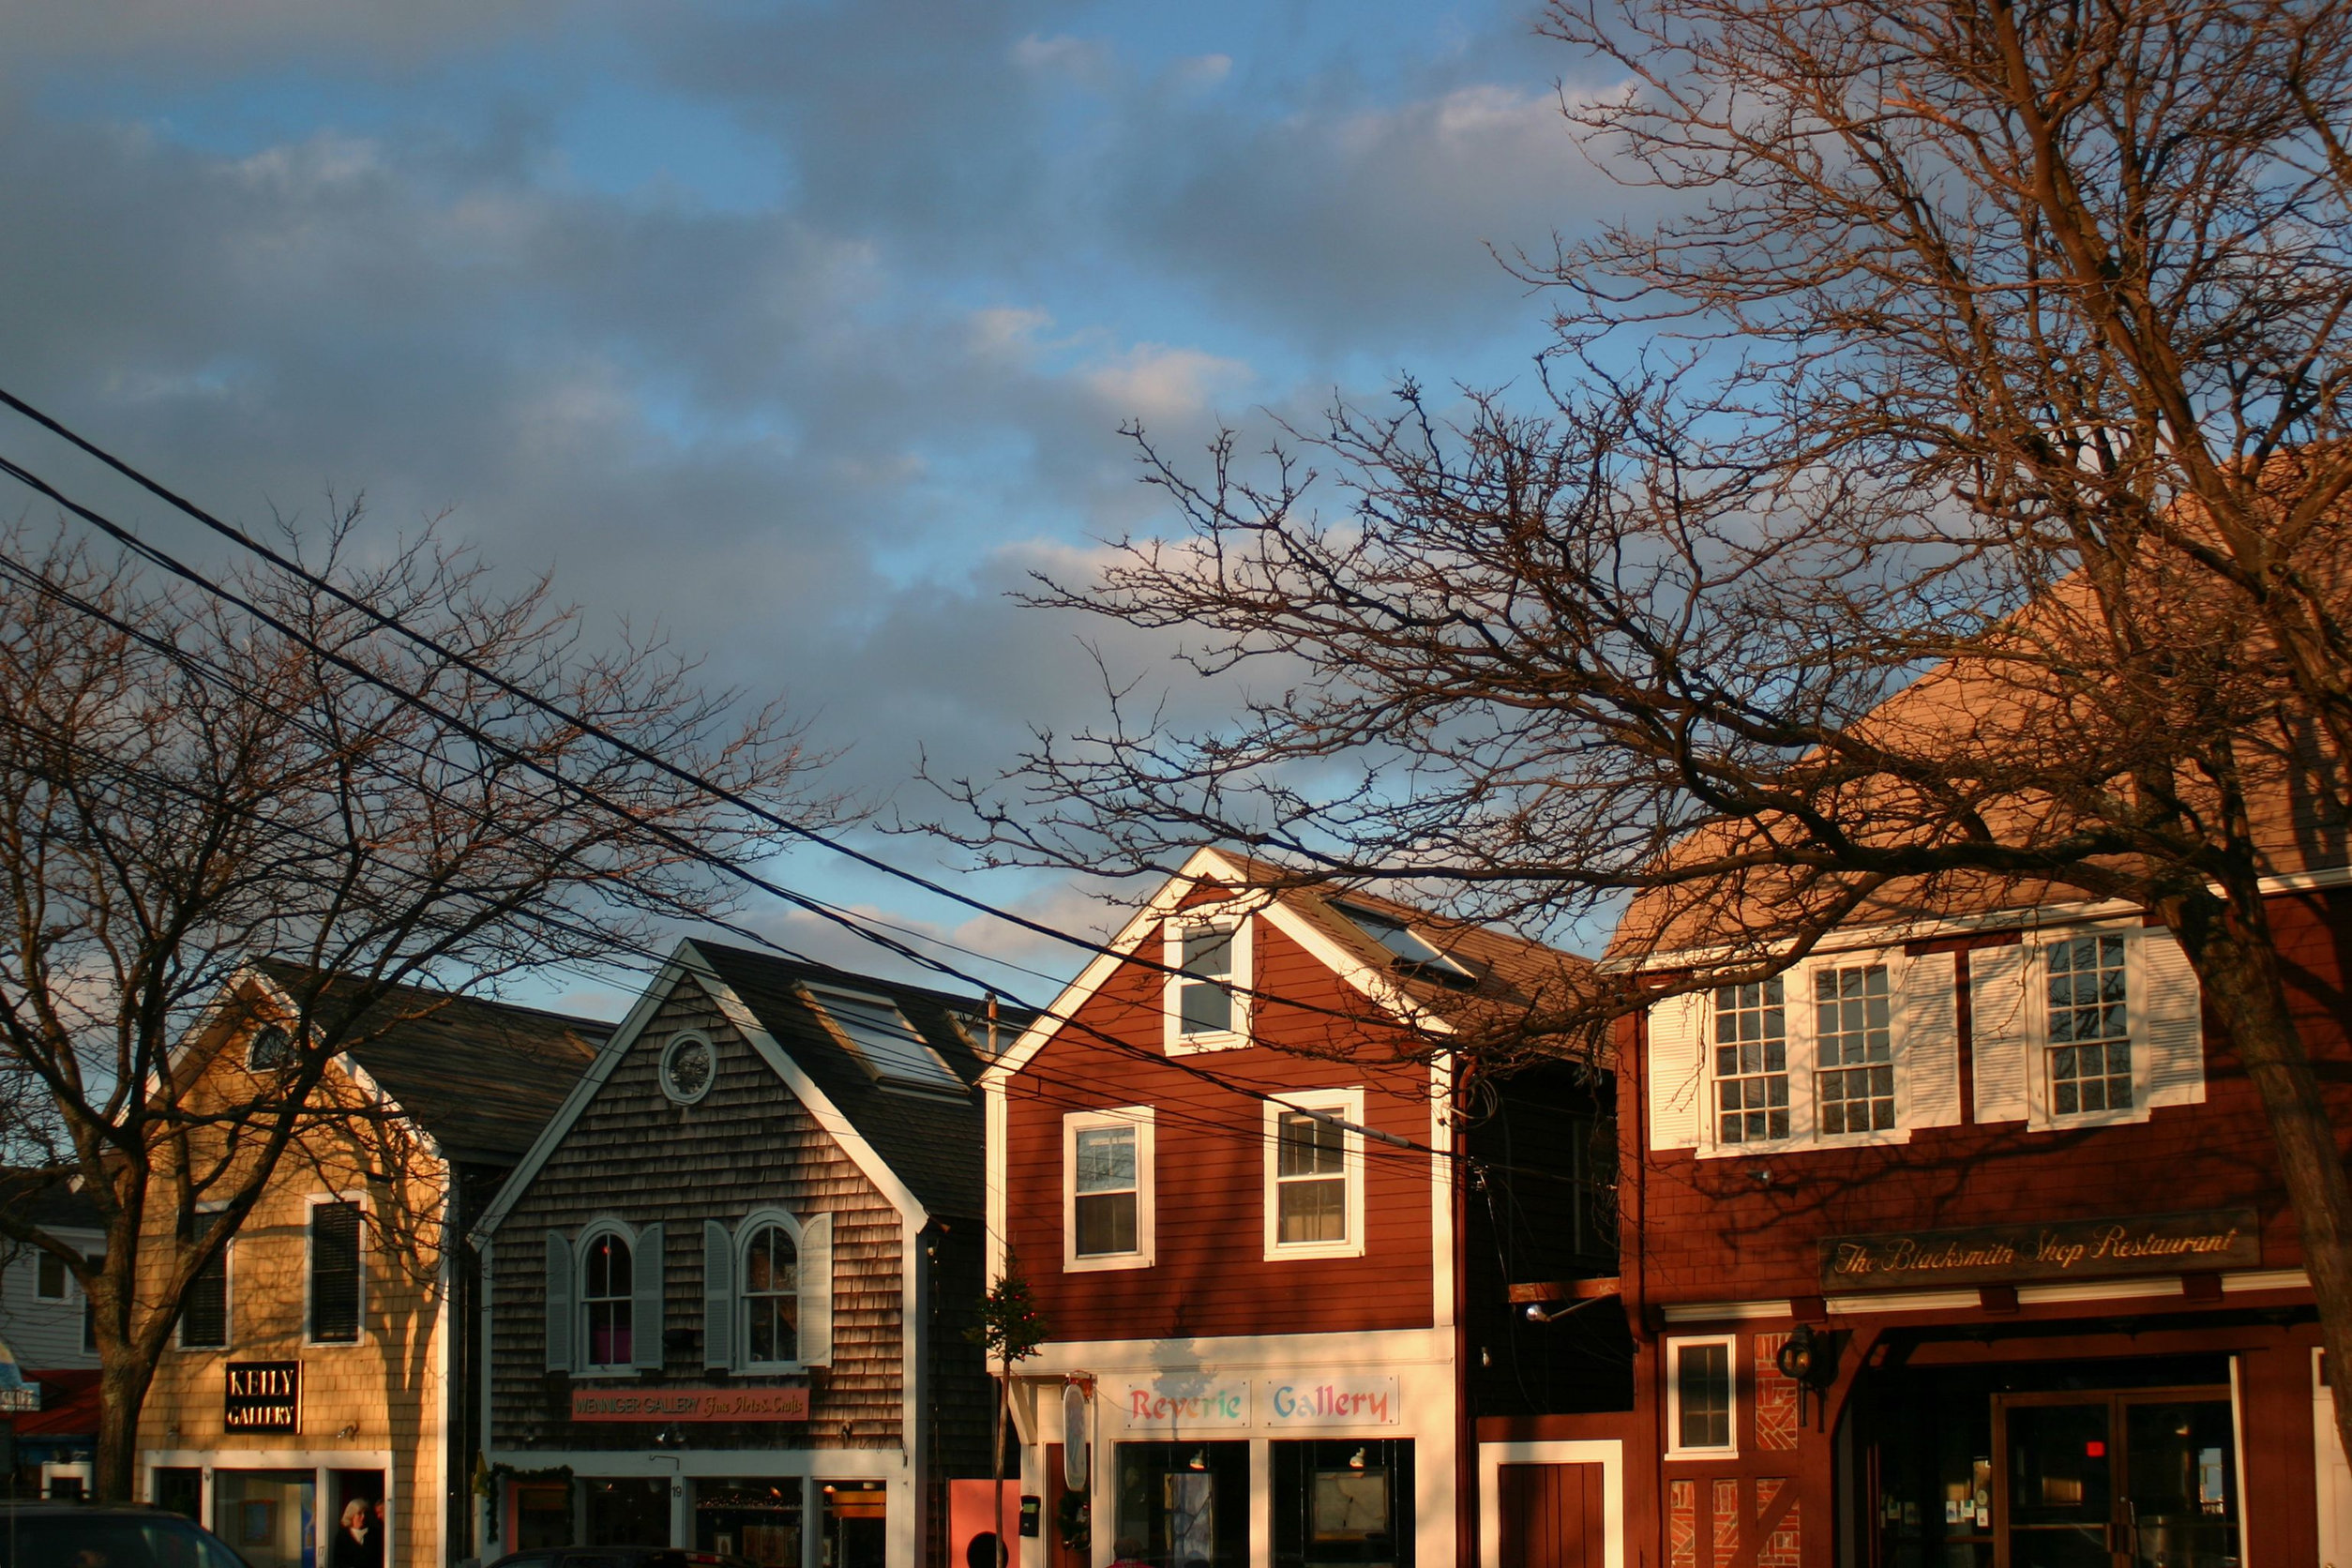 New Bill Focuses on Housing Shortage